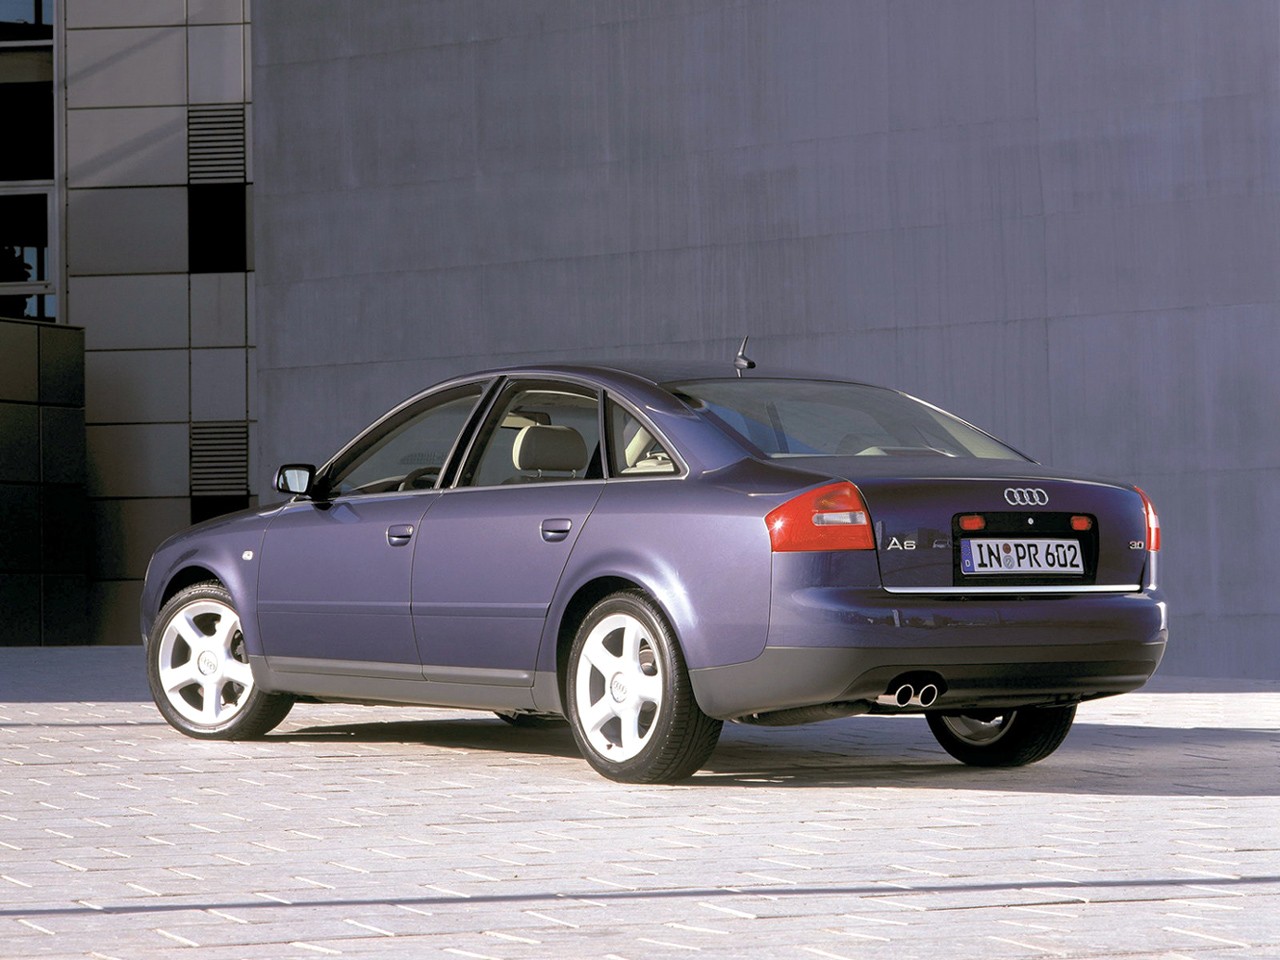 AUDI A6 - 2001, 2002, 2003, 2004 - autoevolution